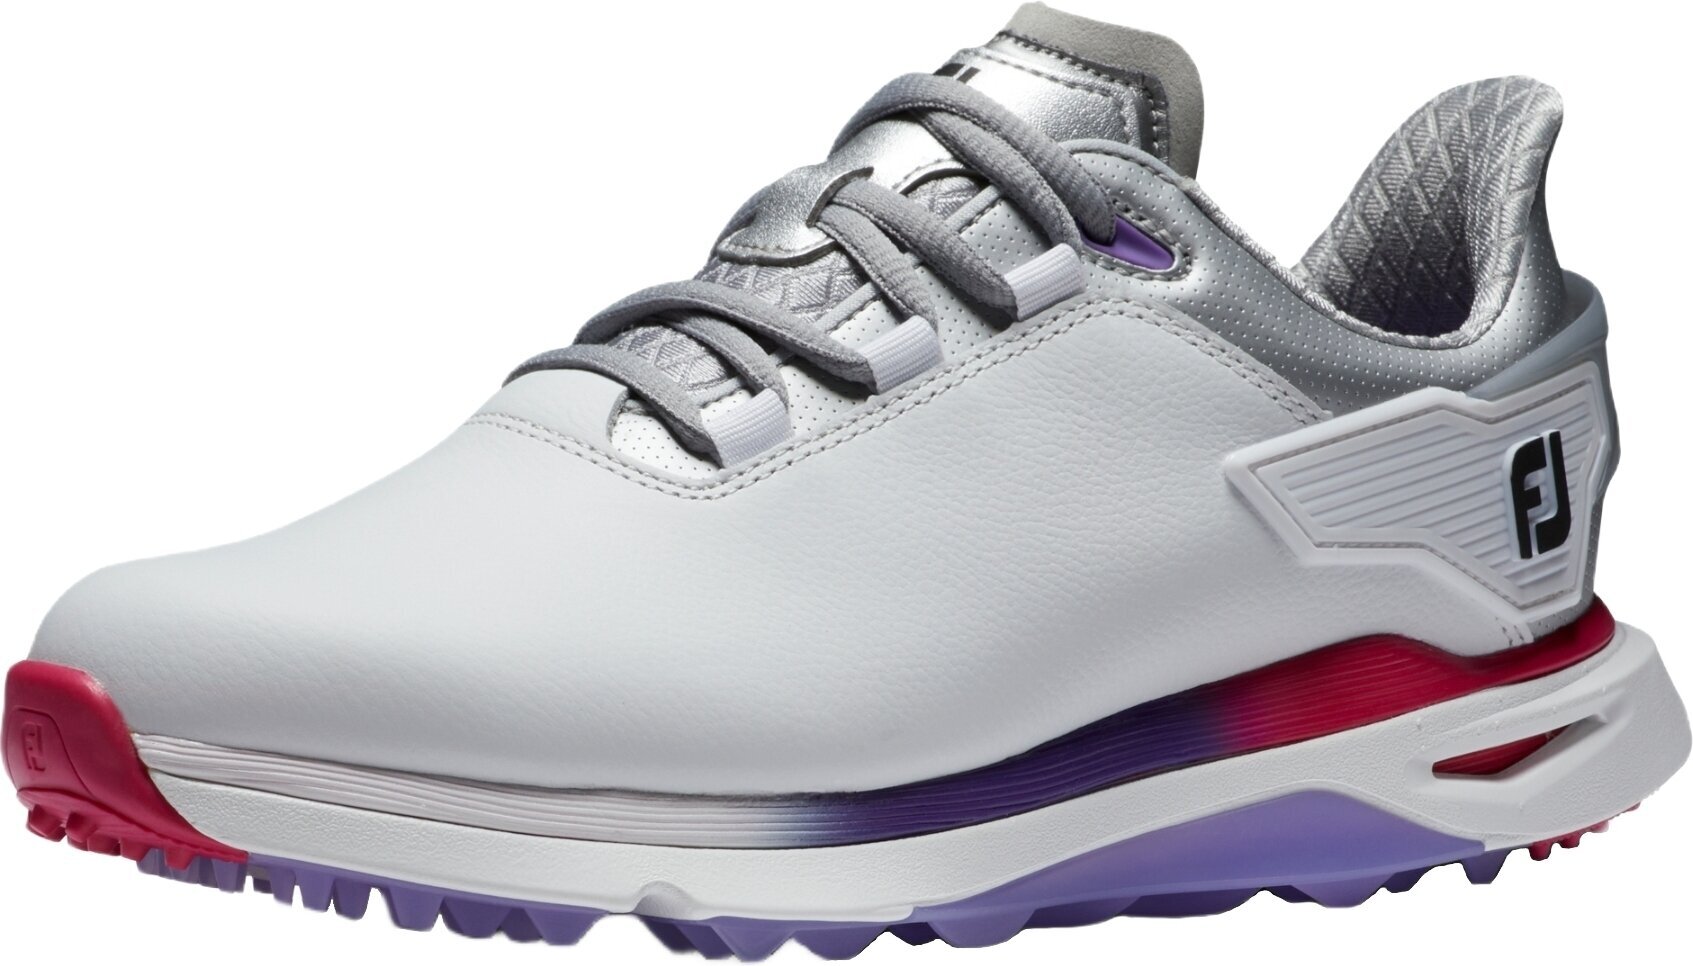 Footjoy PRO SLX Womens Golf Shoes White/Silver/Multi 40,5